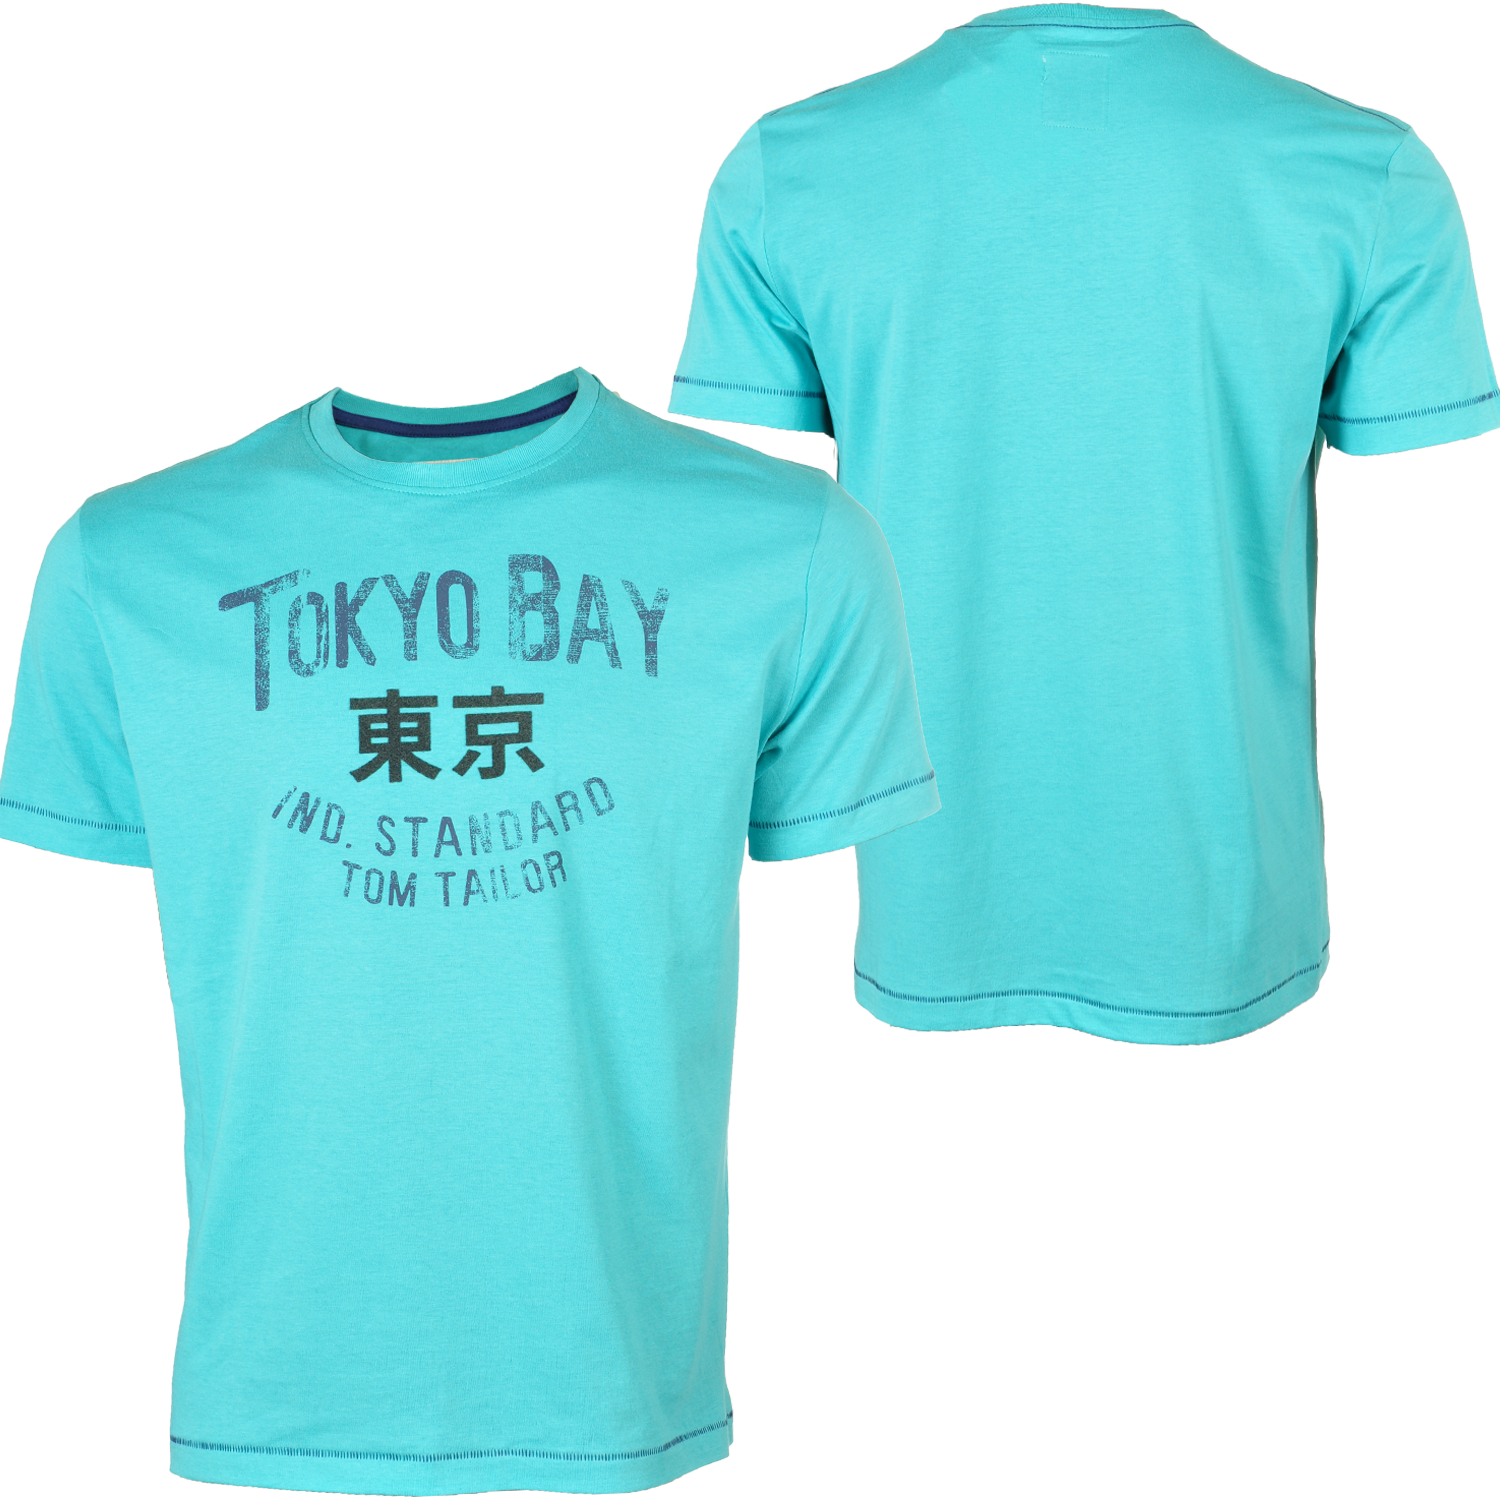 Foto Tom Tailor Tokyo Bay T-shirt Turquesa